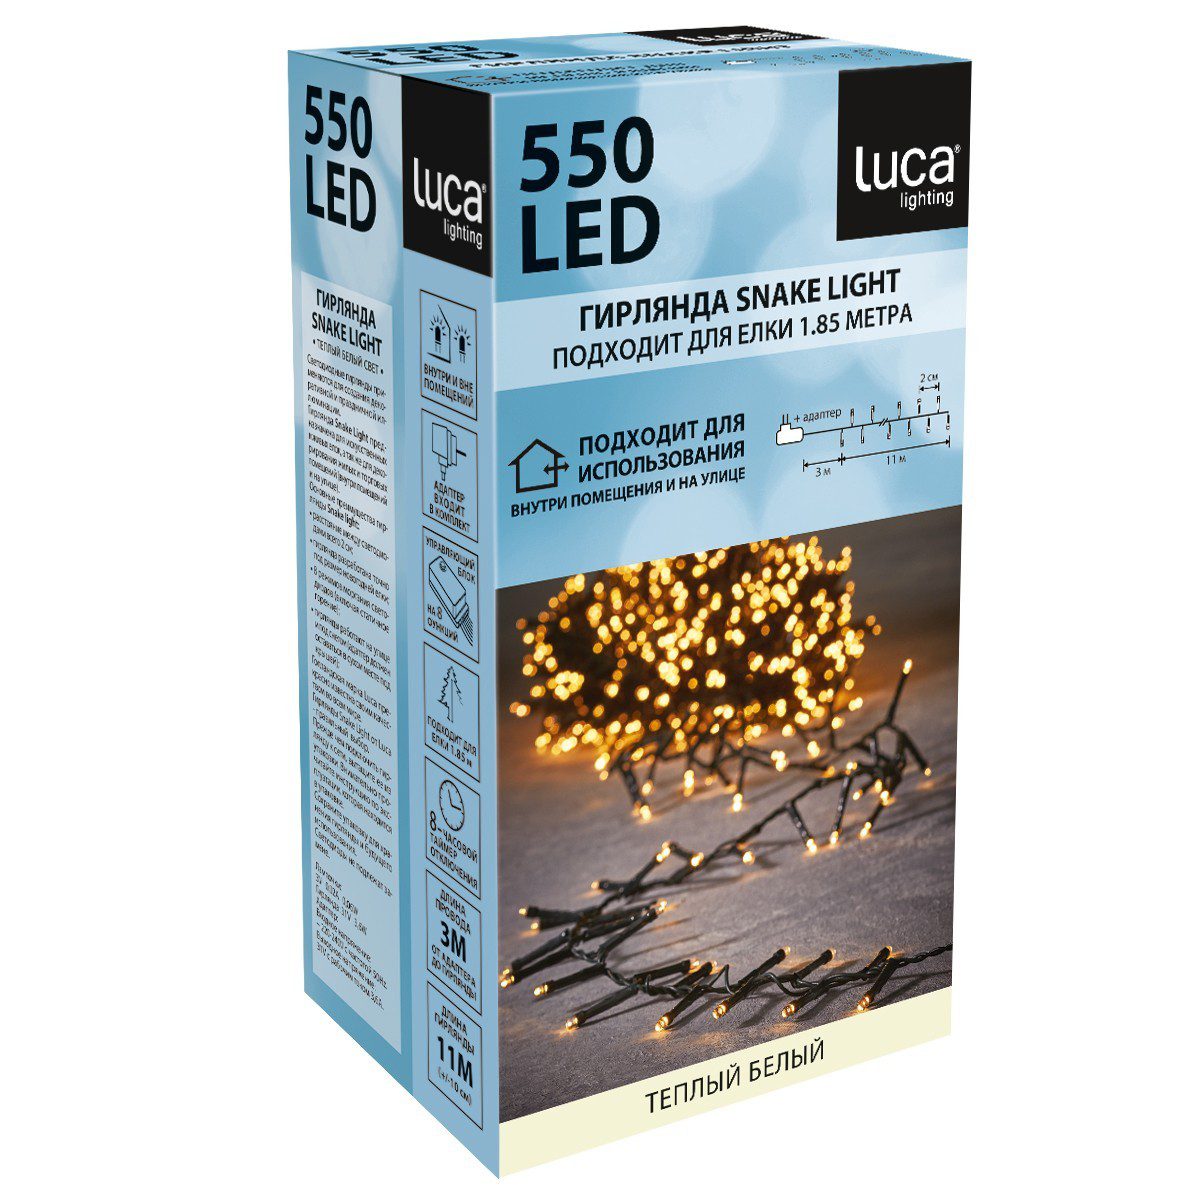 Гирлянда Luca Snake light теплый белый свет (550 ламп, длина гирлянды 1100 см) для ёлки 185 см